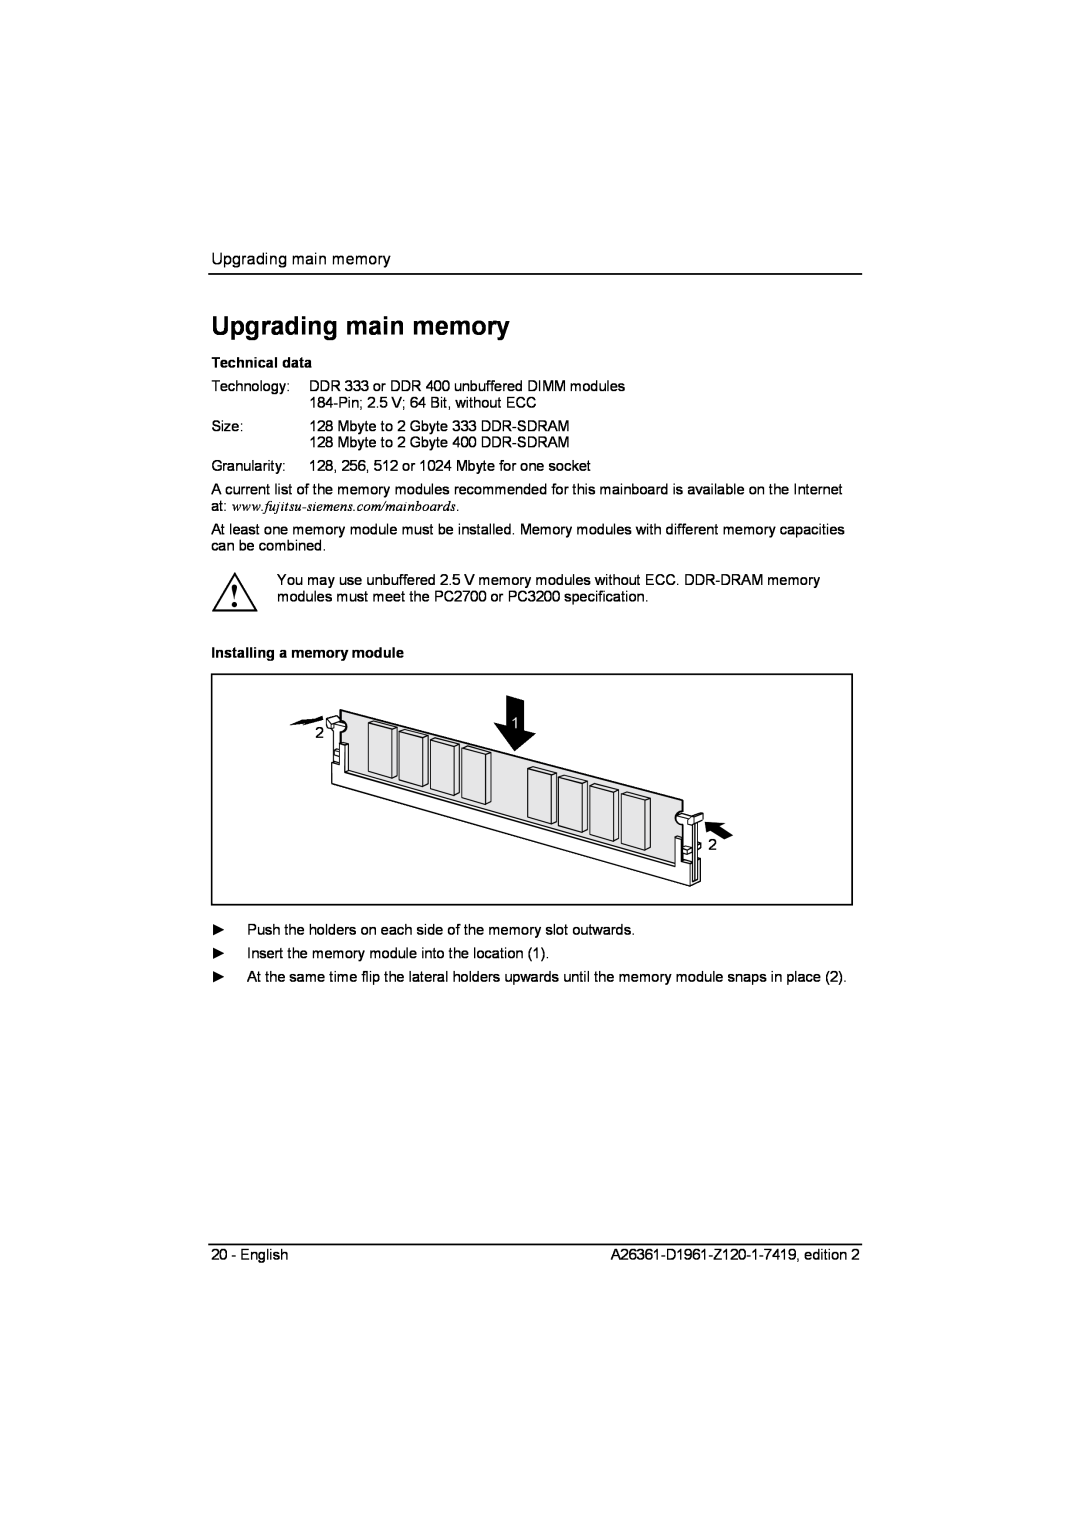 Fujitsu D1961 technical manual Upgrading main memory, Technical data, Installing a memory module 